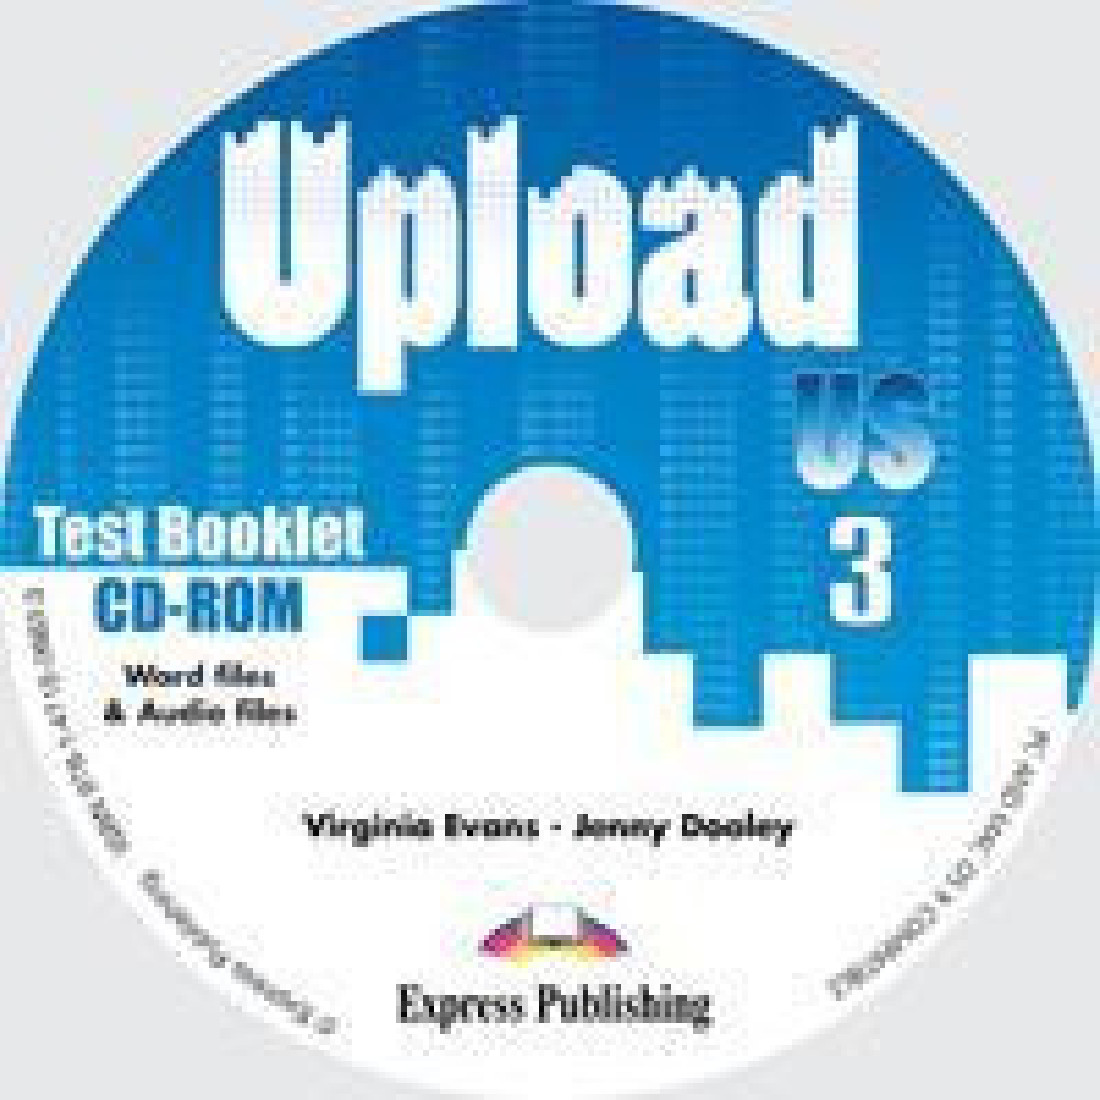 UPLOAD US 3 TEST BOOK CD-ROM